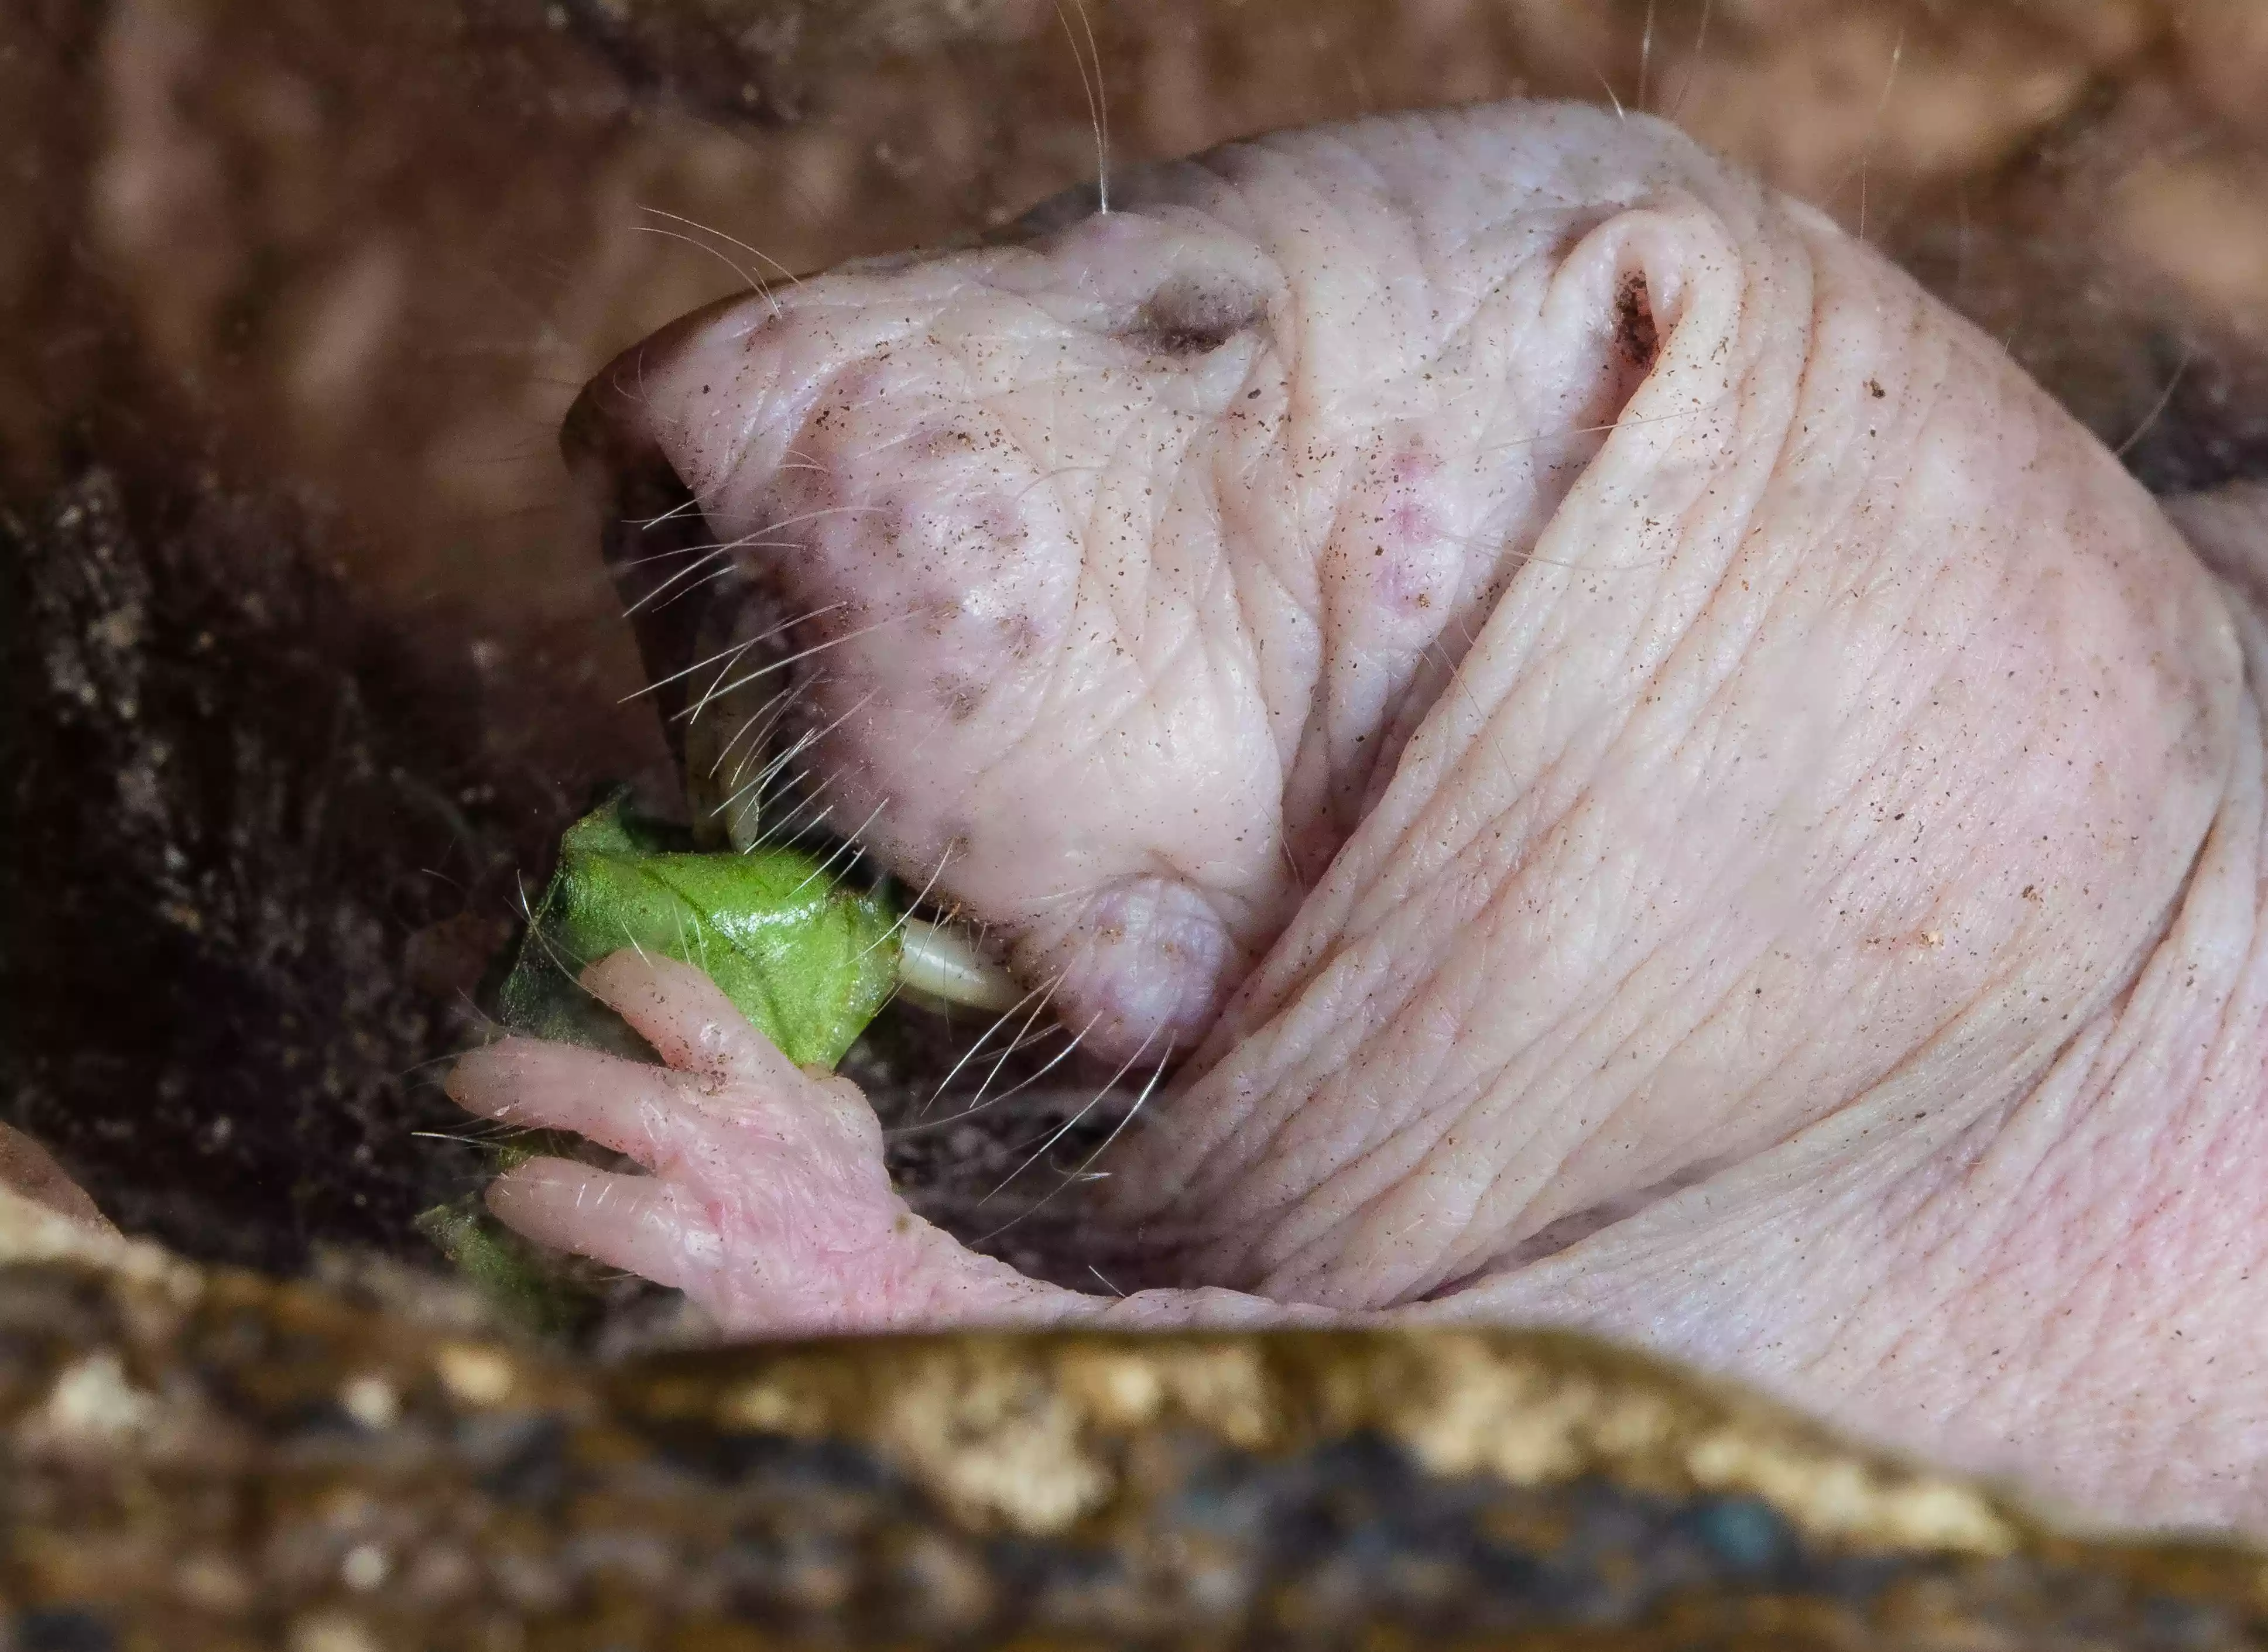 A naked mole rat eating a vegetable.